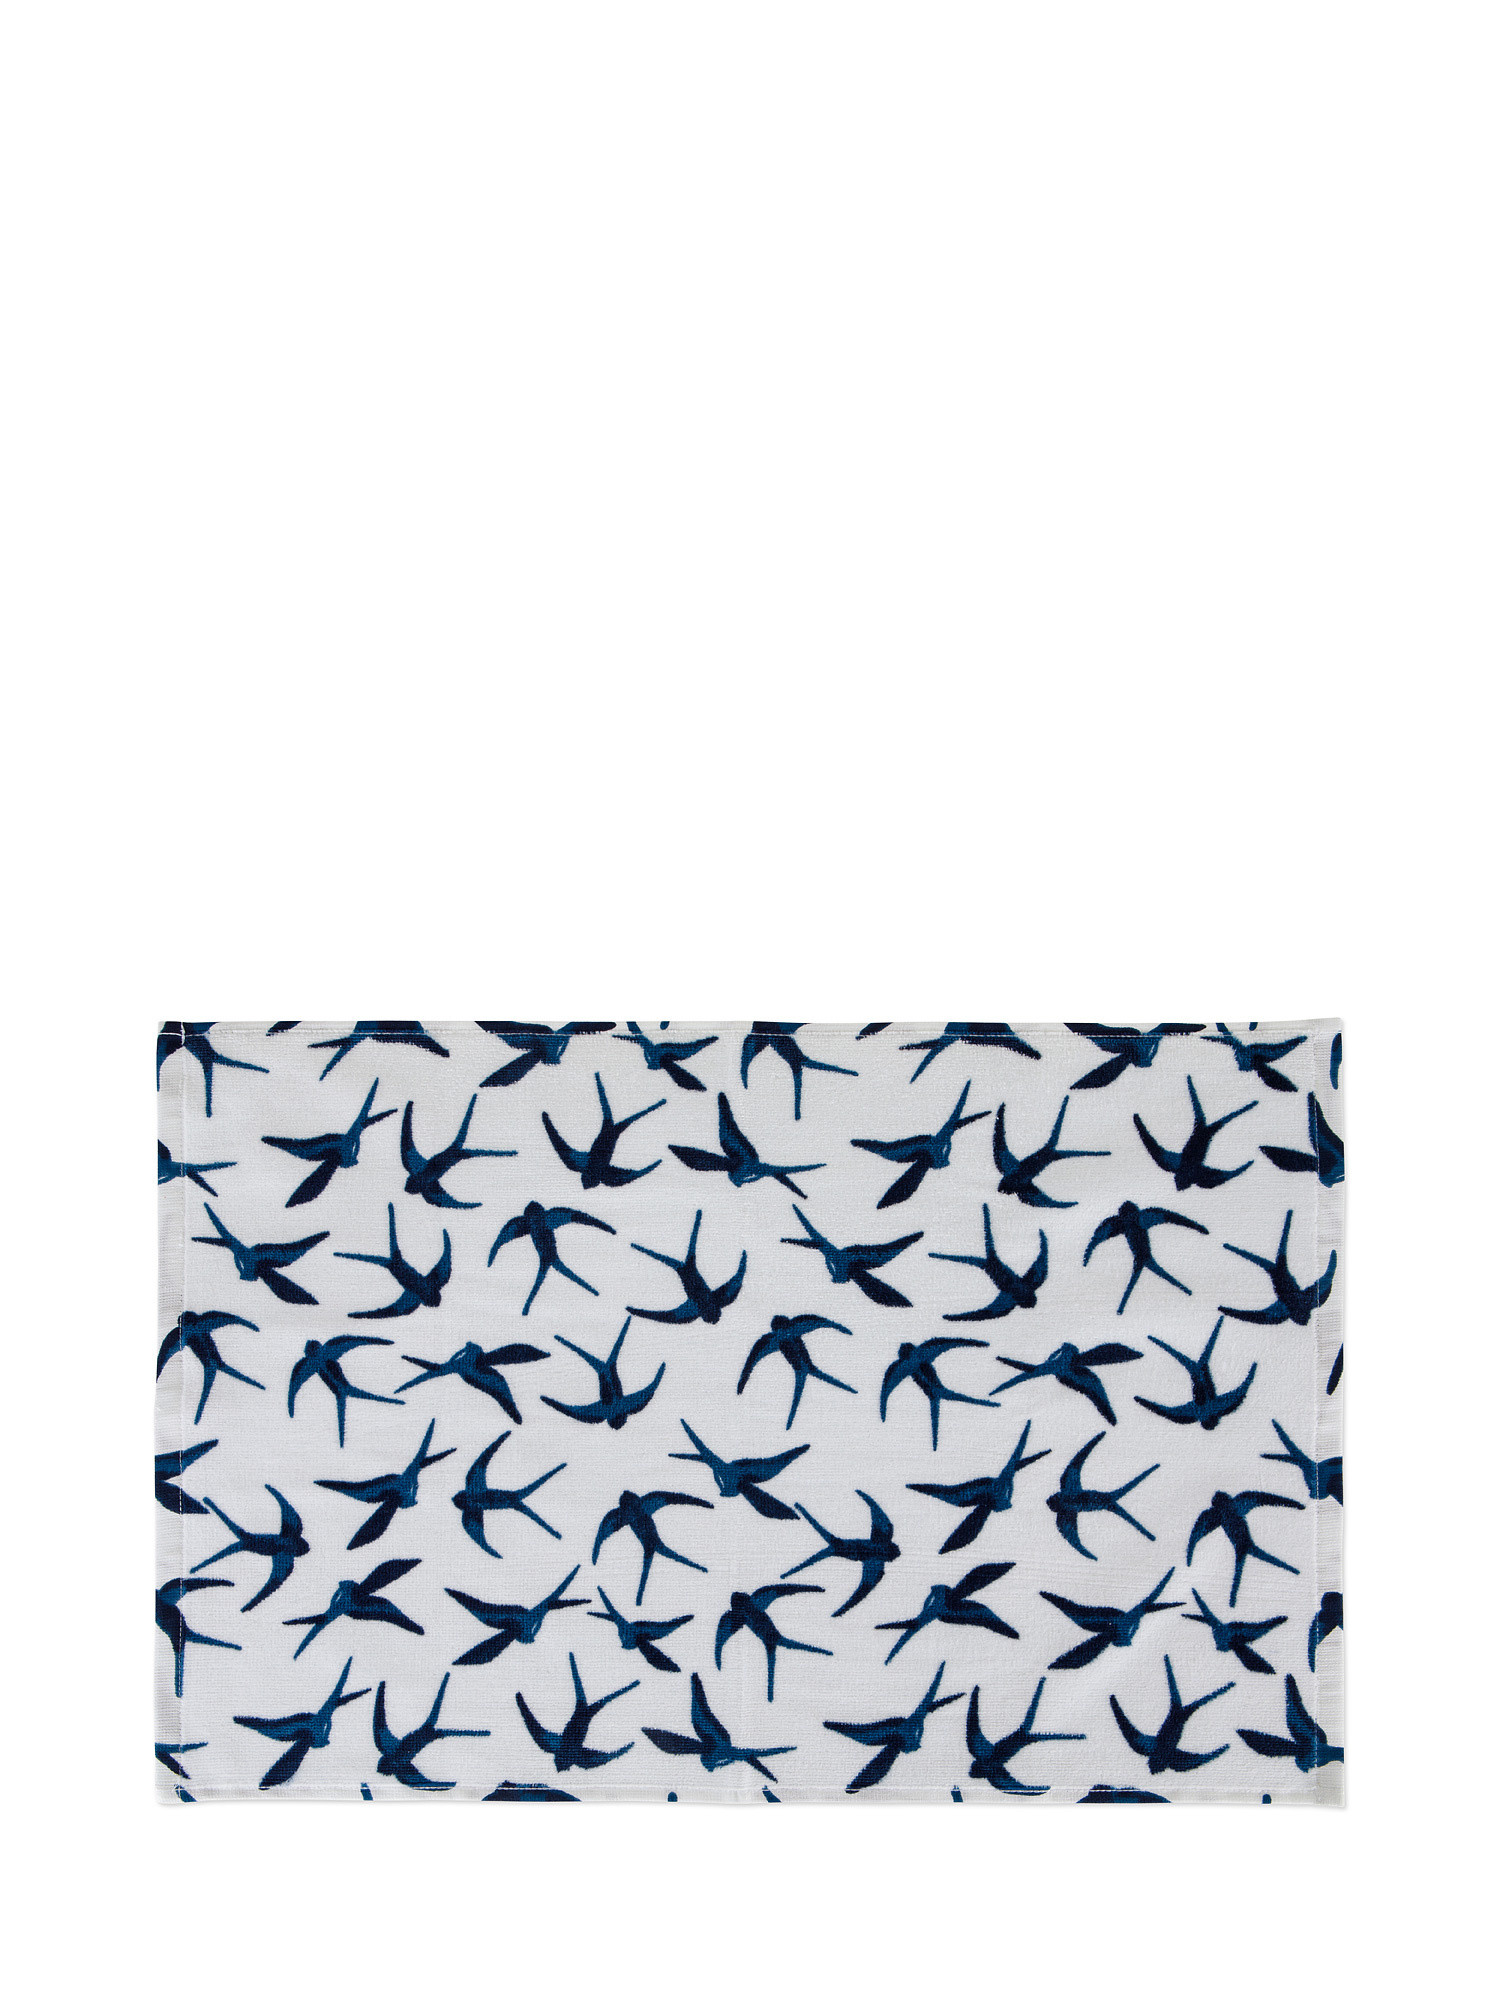 Asciugamano cotone velour motivo rondini, Bianco, large image number 1